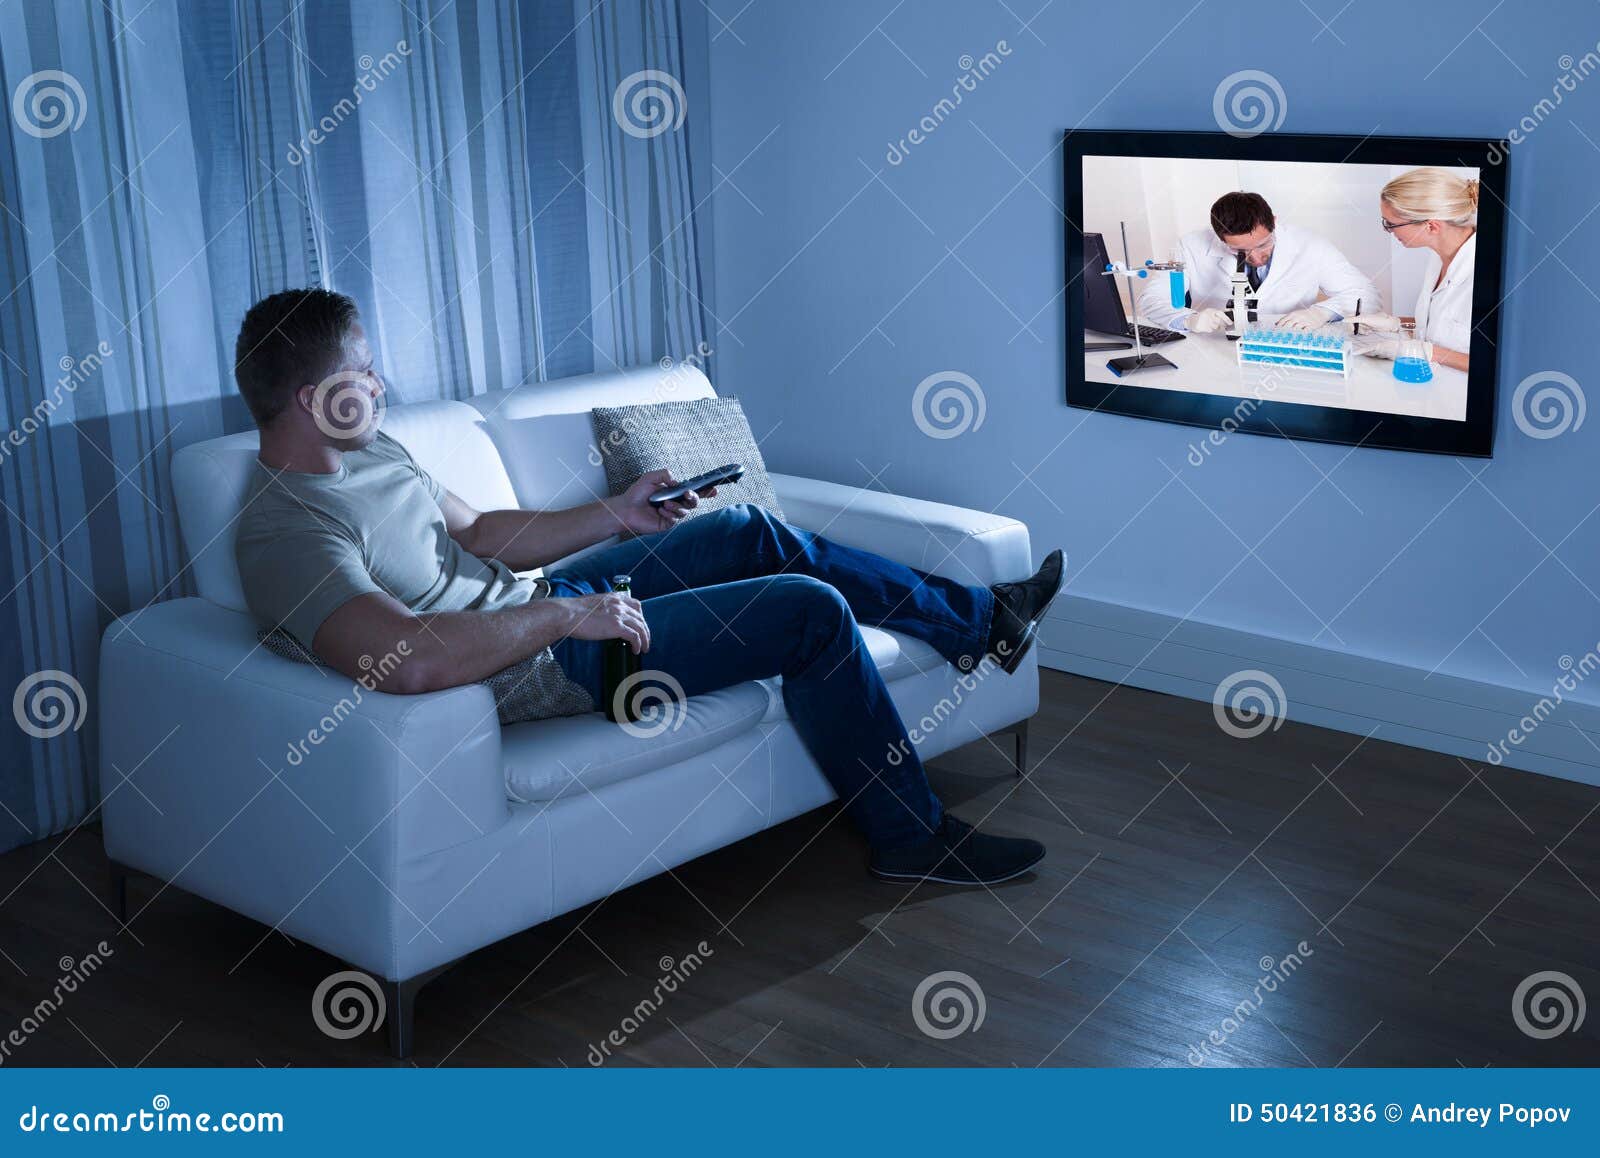 Life more tv. Кресло перед телевизором. Человек перед телевизором. Человек сидит перед телевизором. Человек на диване перед телевизором.